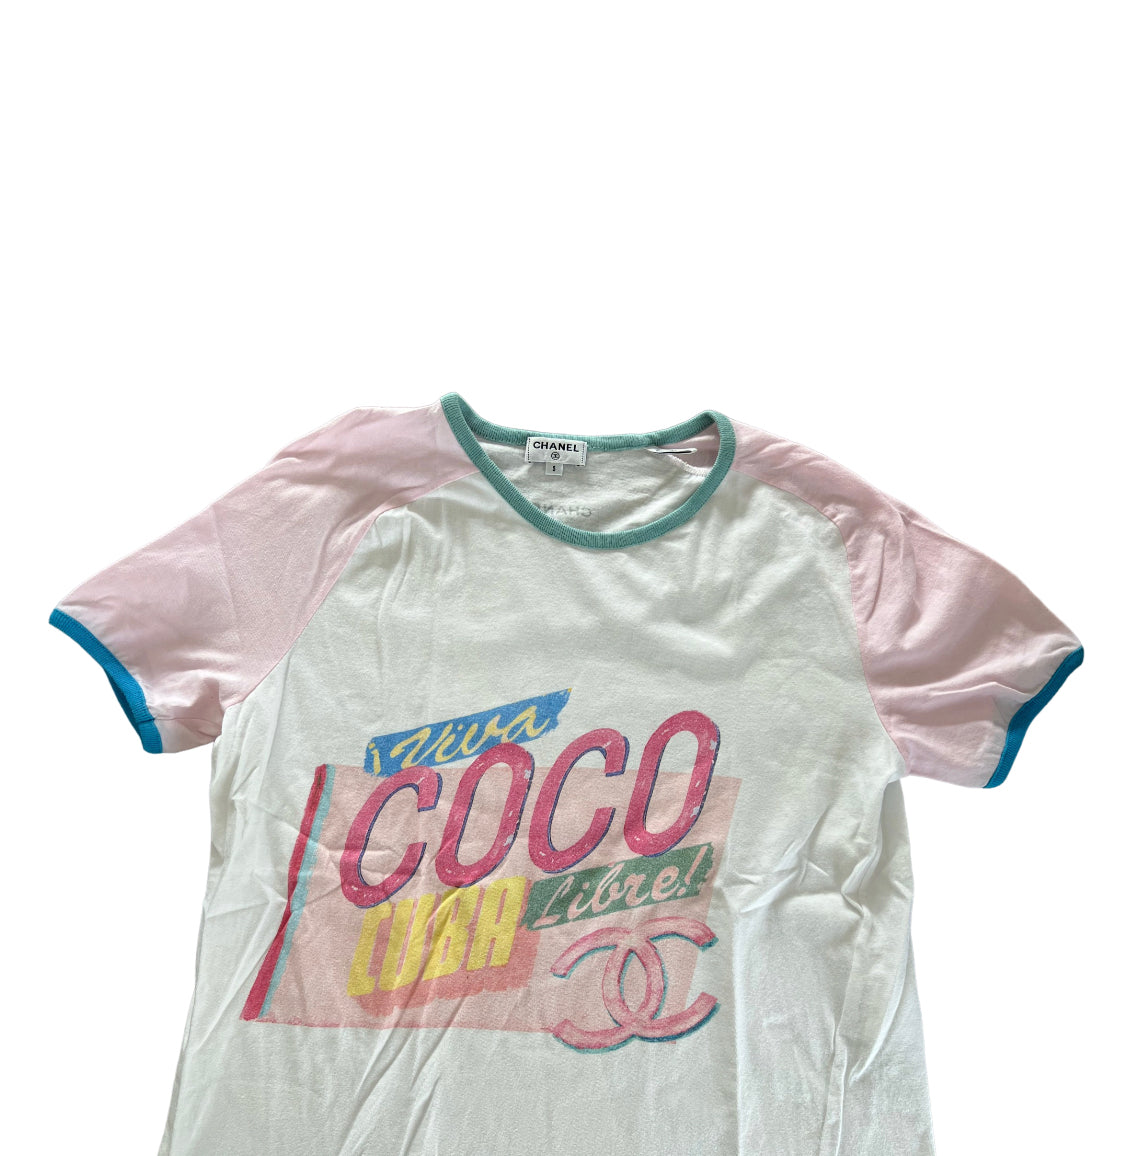 Chanel Coco Cuba Cruise T-Shirt